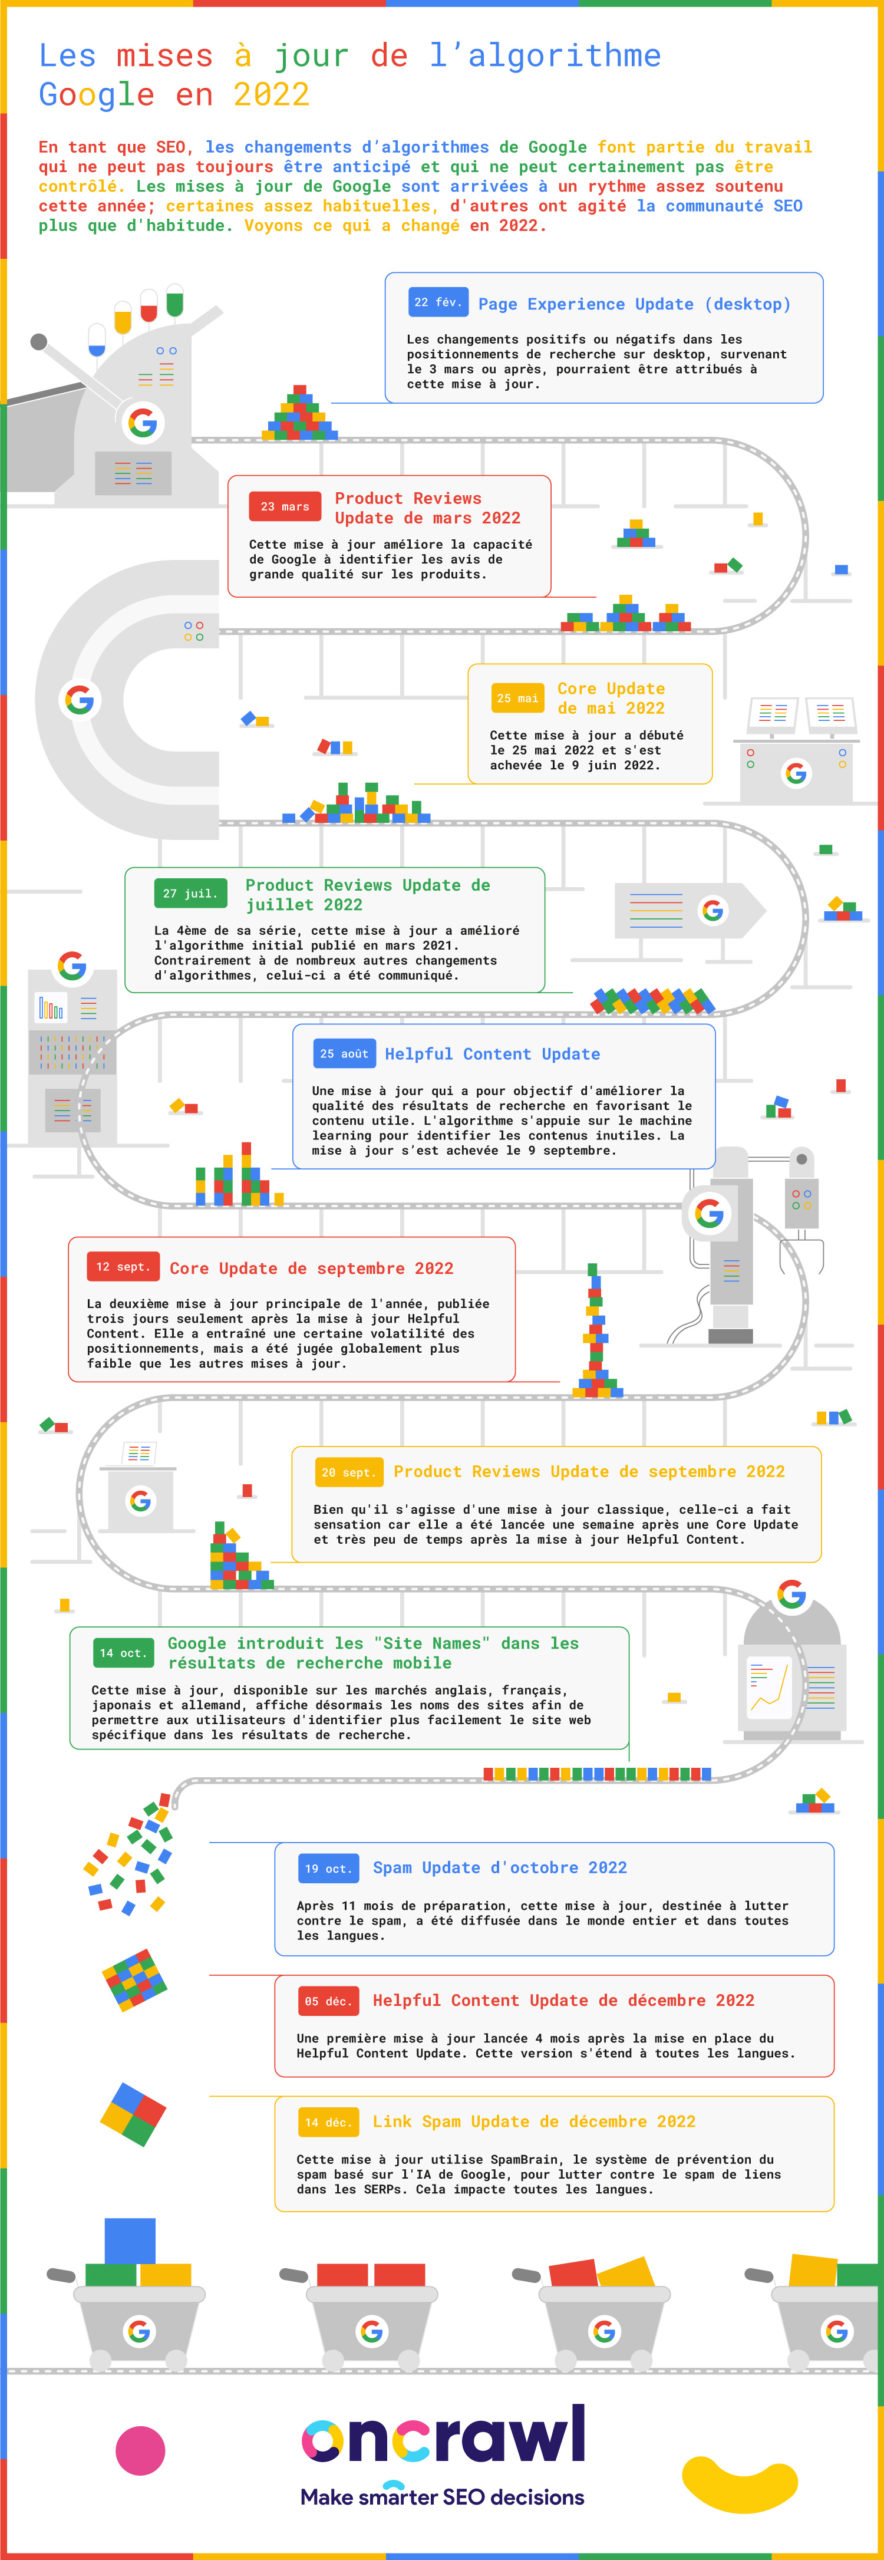 Infographic-Google-Updates-2022-v5-fr-scaled